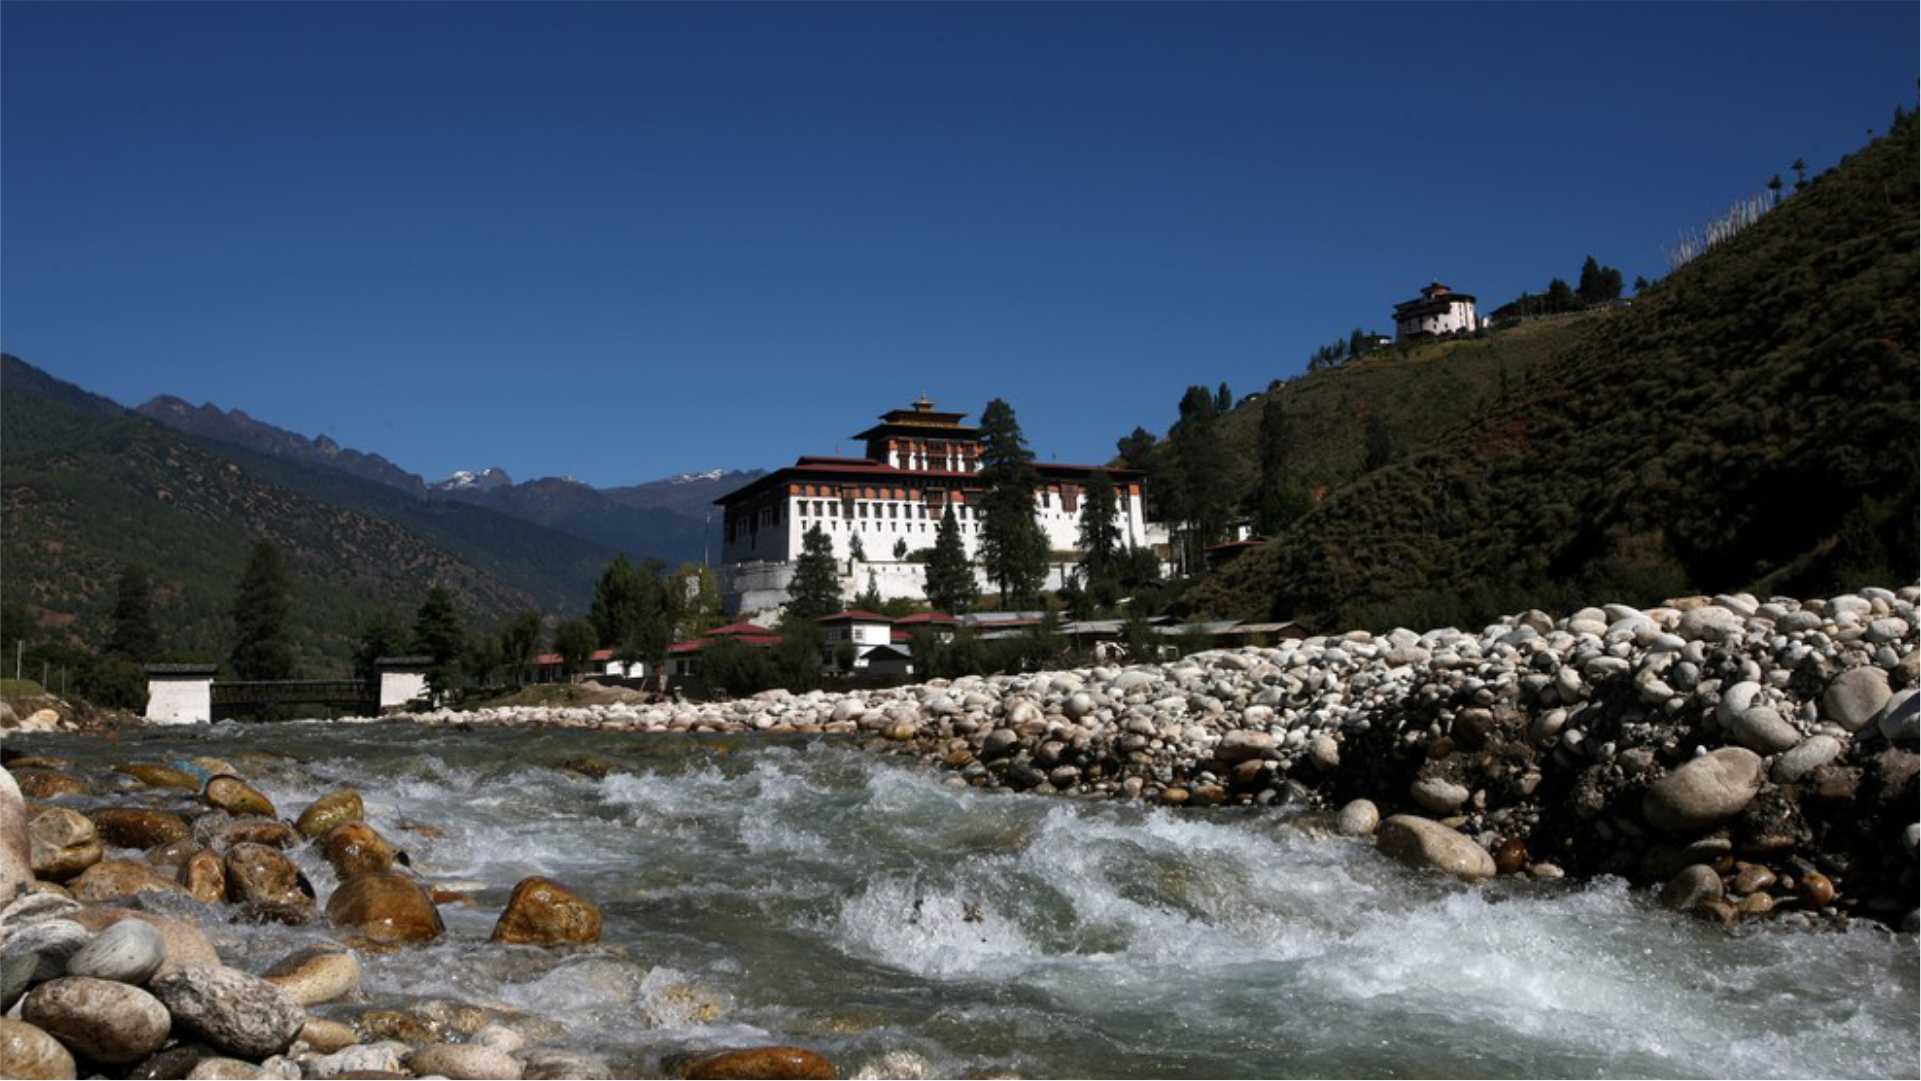 Bhutan at Glance 4 Nights / 5 Days